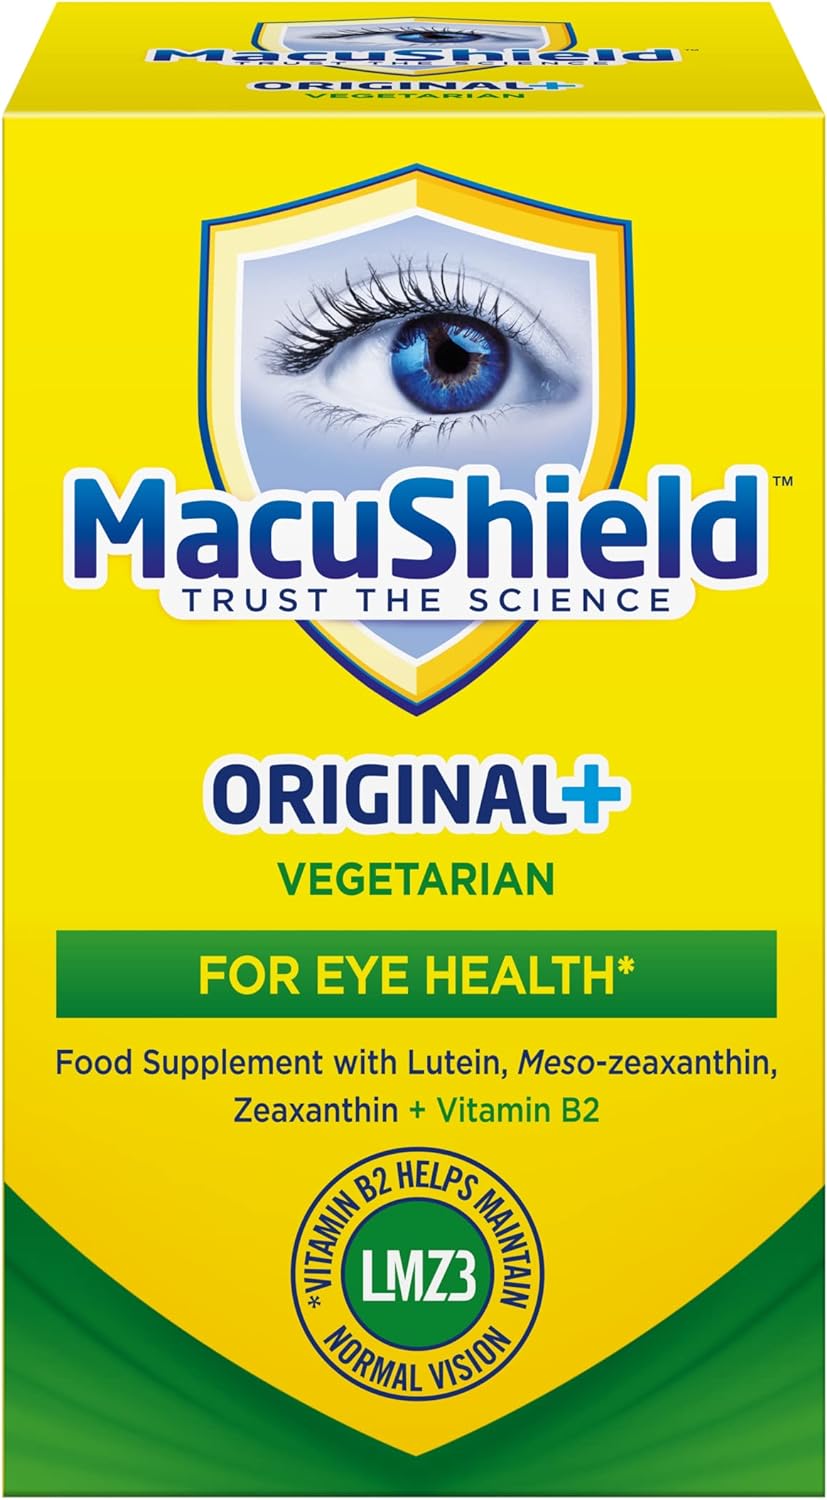 MacuShield™ Original+ Vegetarian